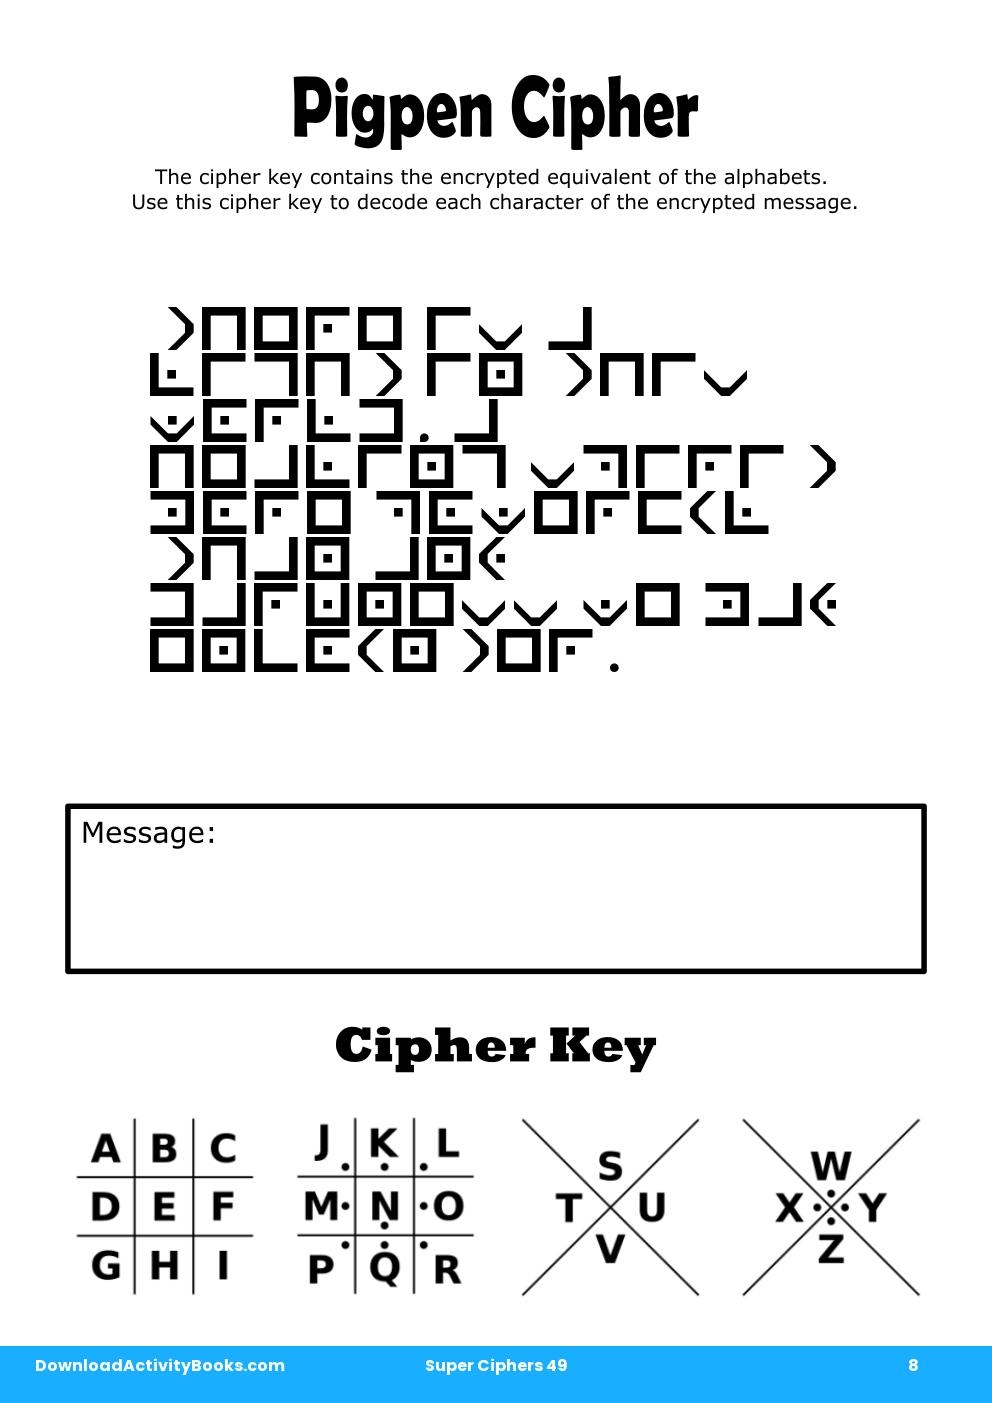 Pigpen Cipher in Super Ciphers 49